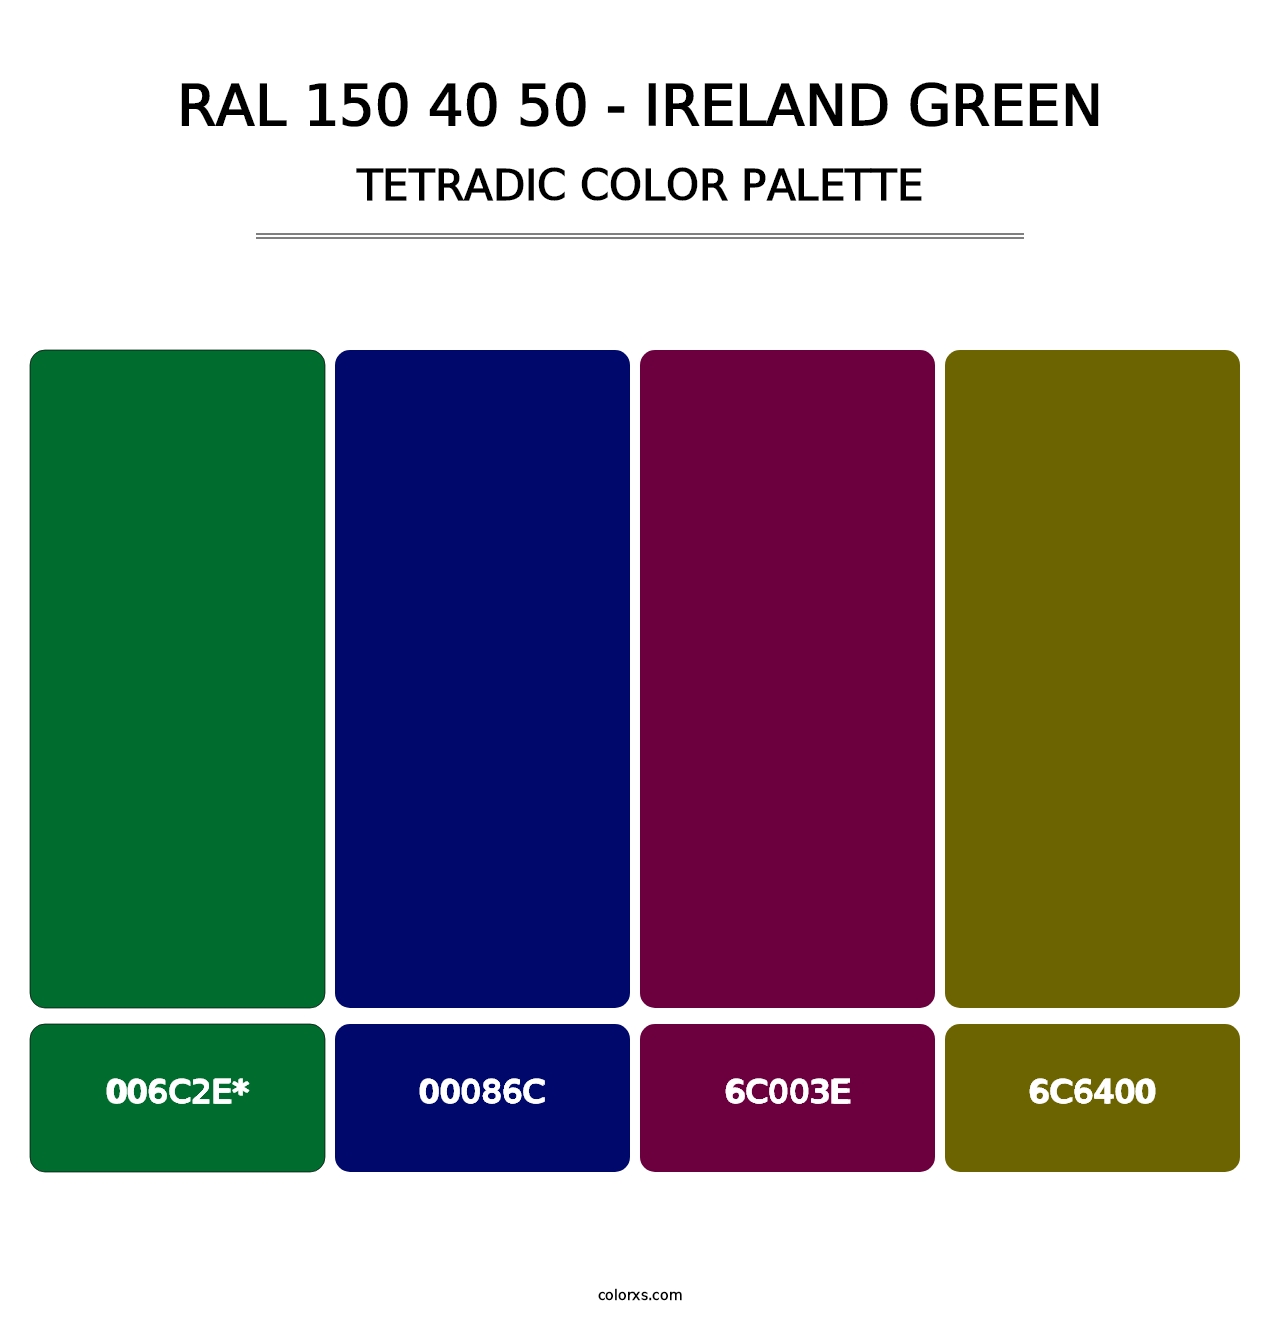 RAL 150 40 50 - Ireland Green - Tetradic Color Palette